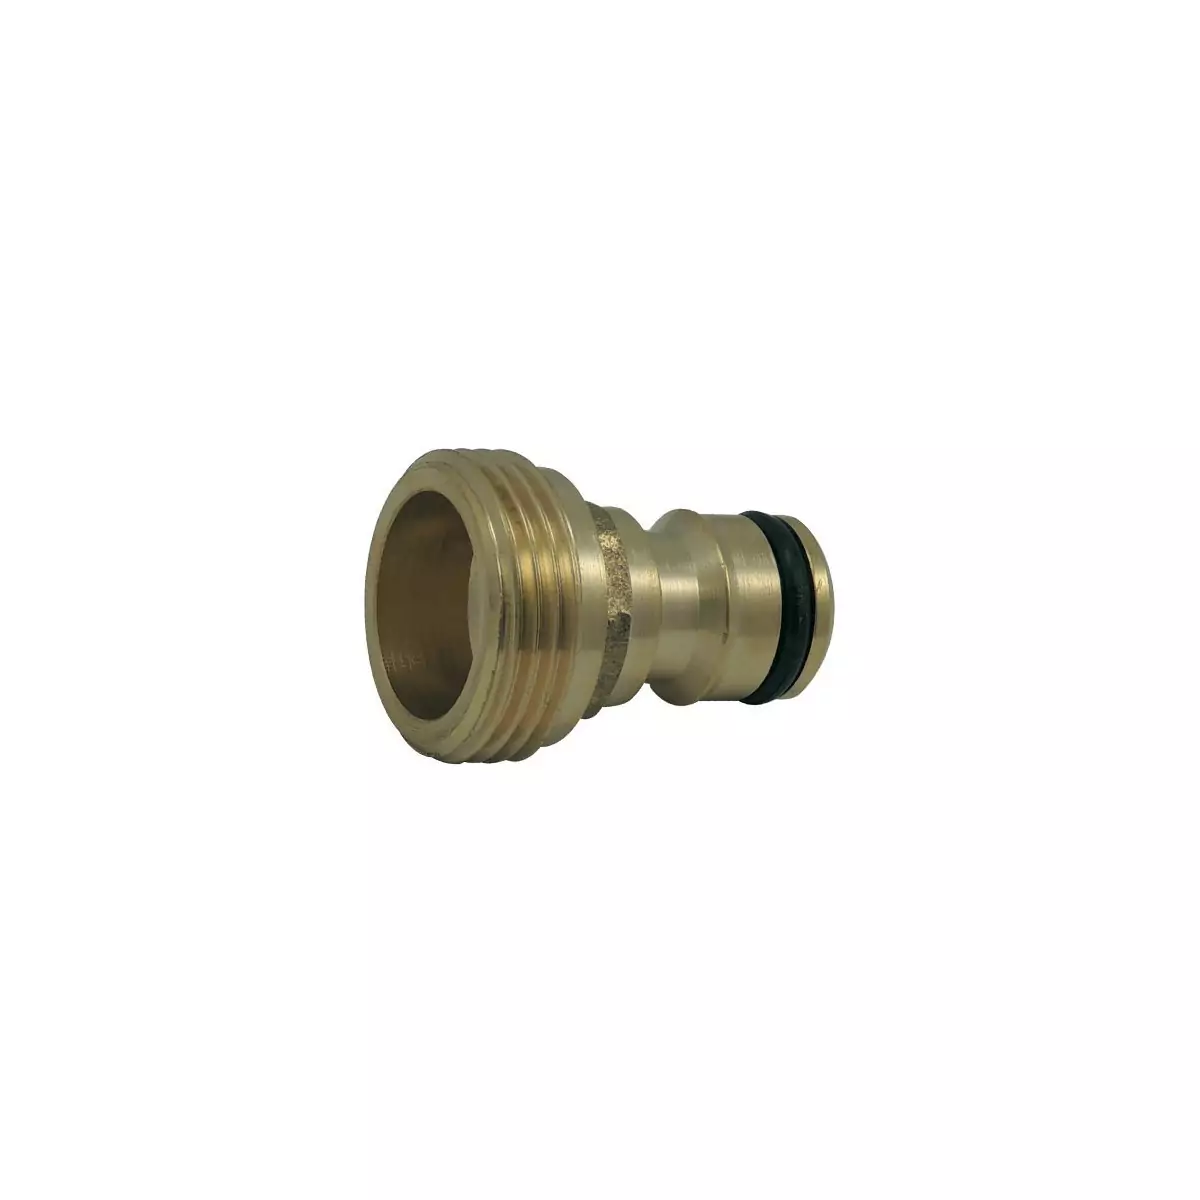 Male brass adapter